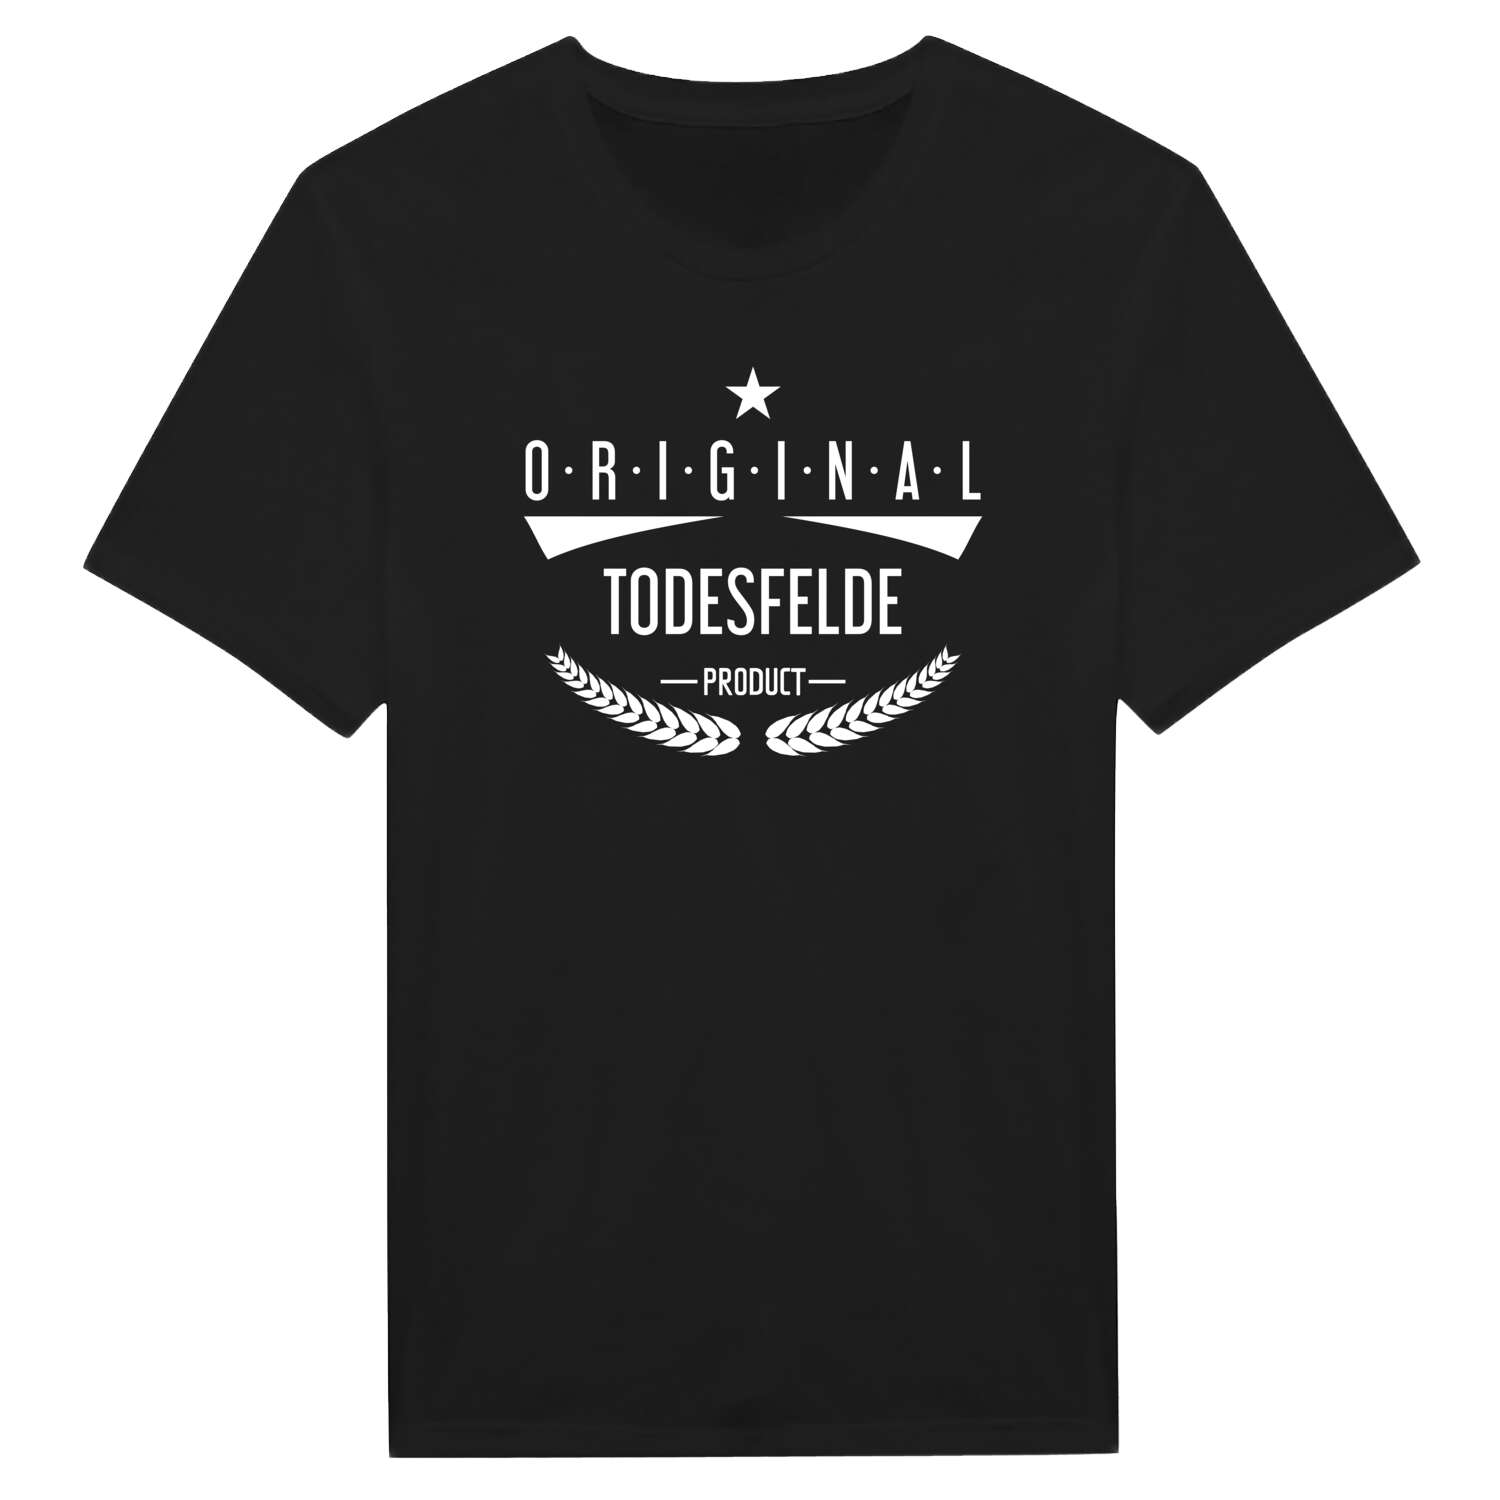 Todesfelde T-Shirt »Original Product«